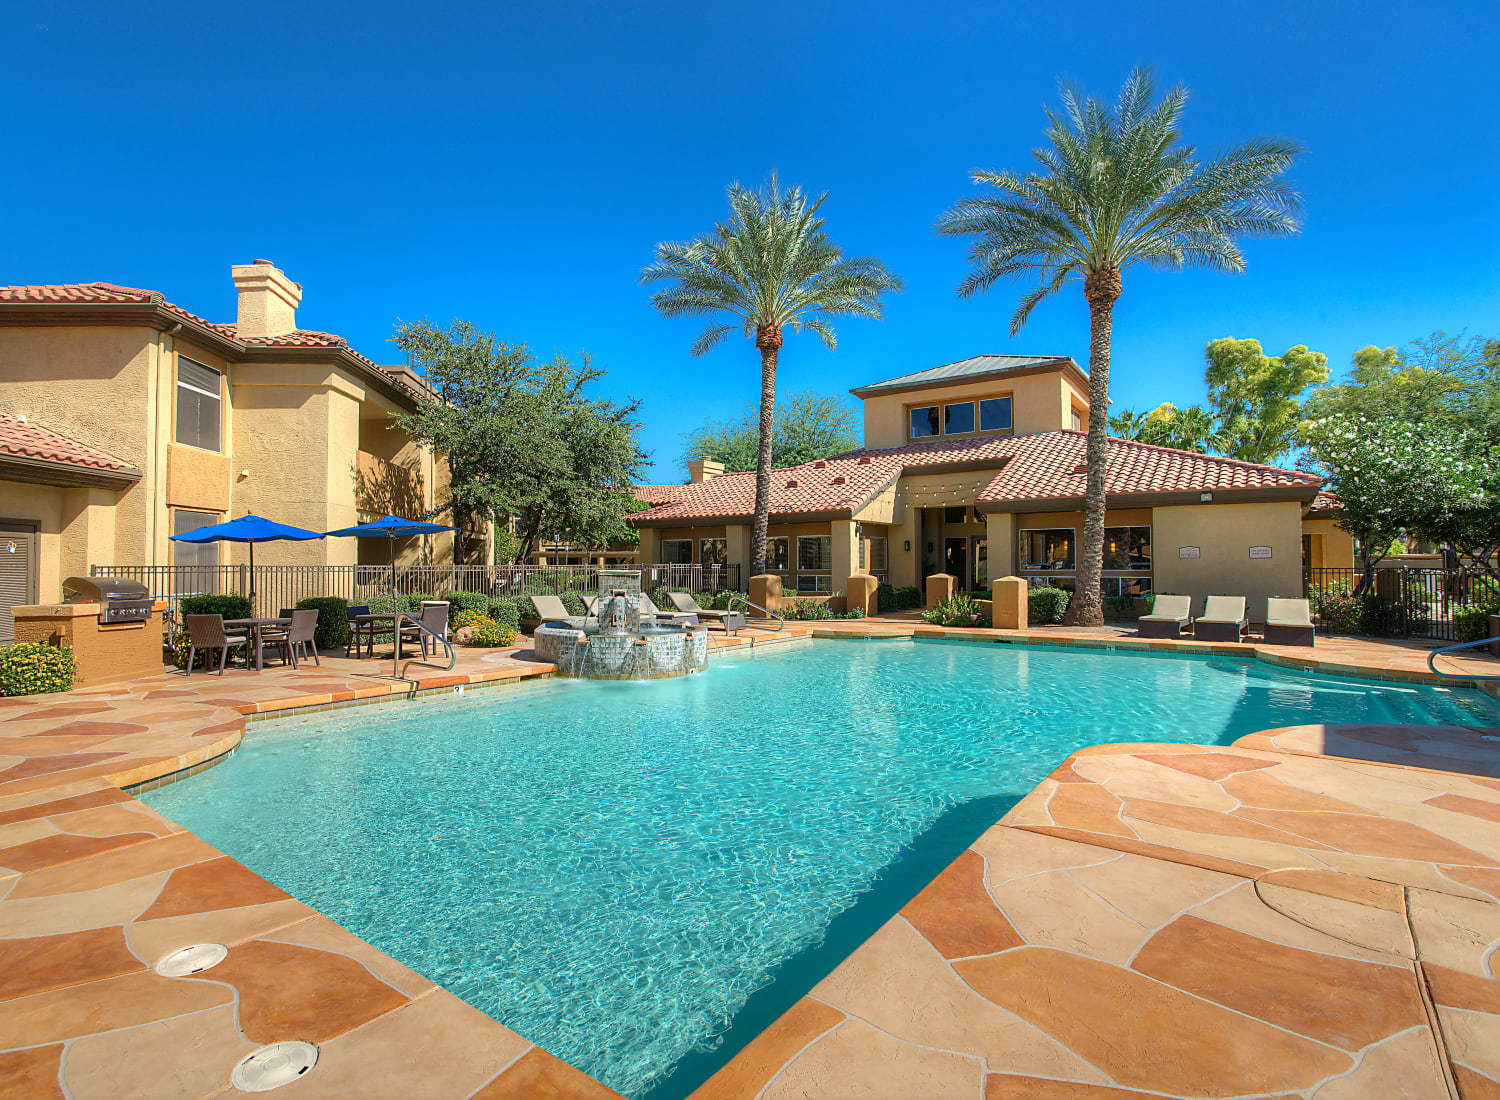 Bellagio apartments in Scottsdale, Arizona